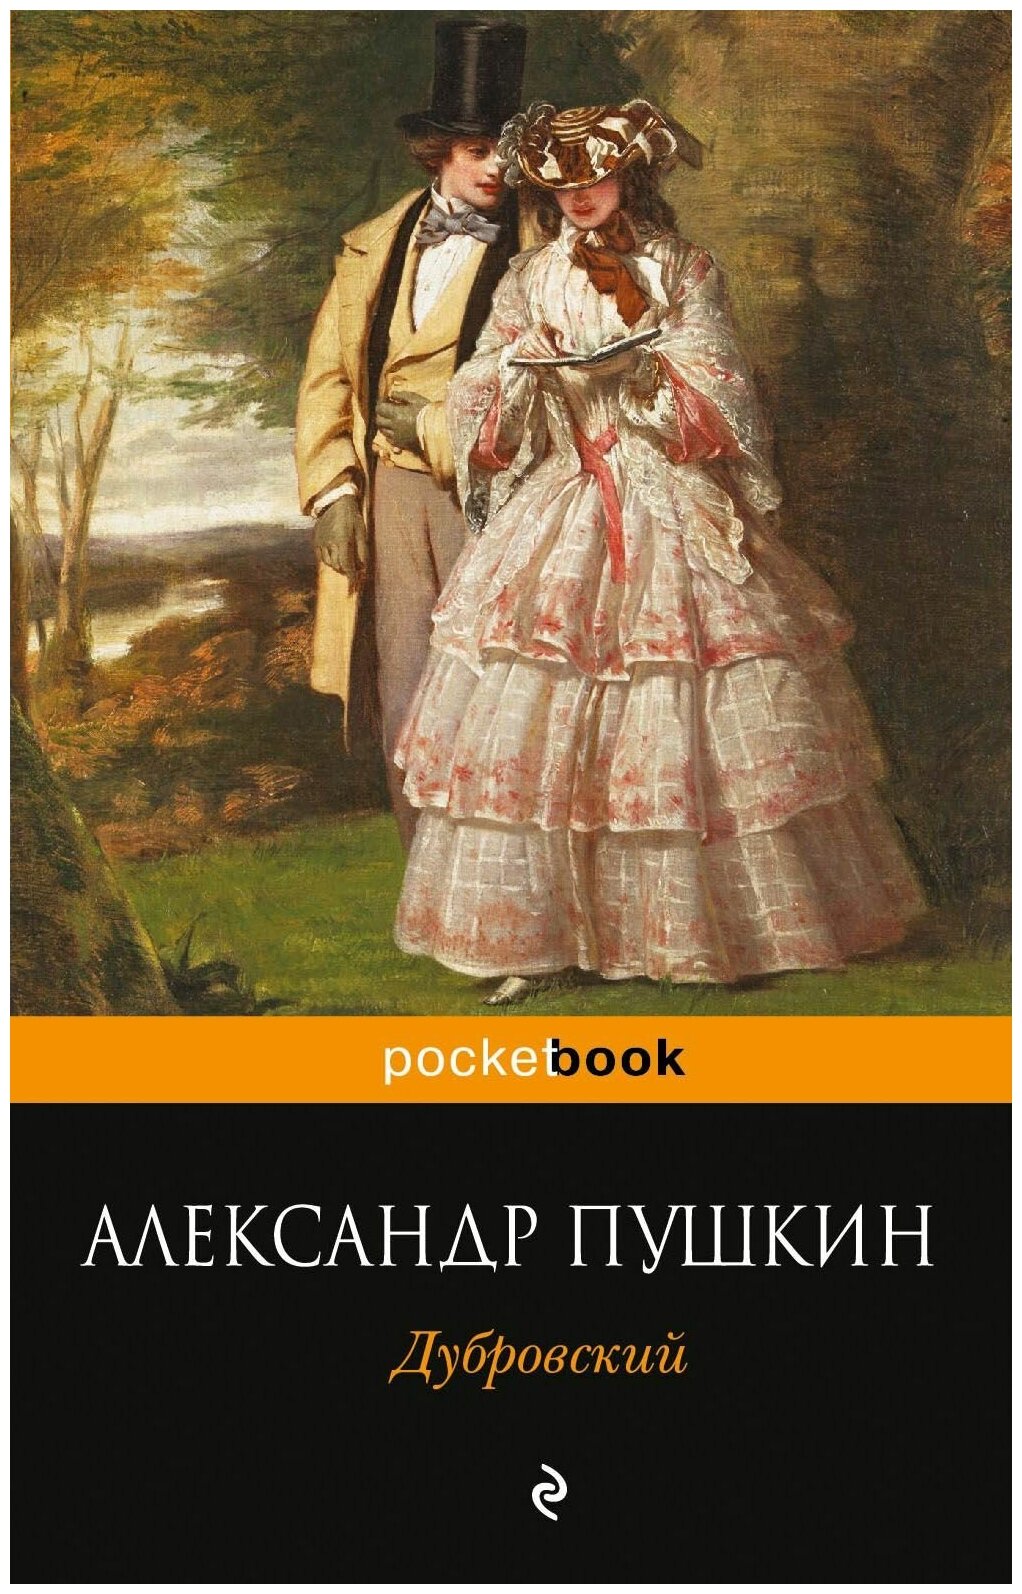 Дубровский (Пушкин Александр Сергеевич) - фото №1